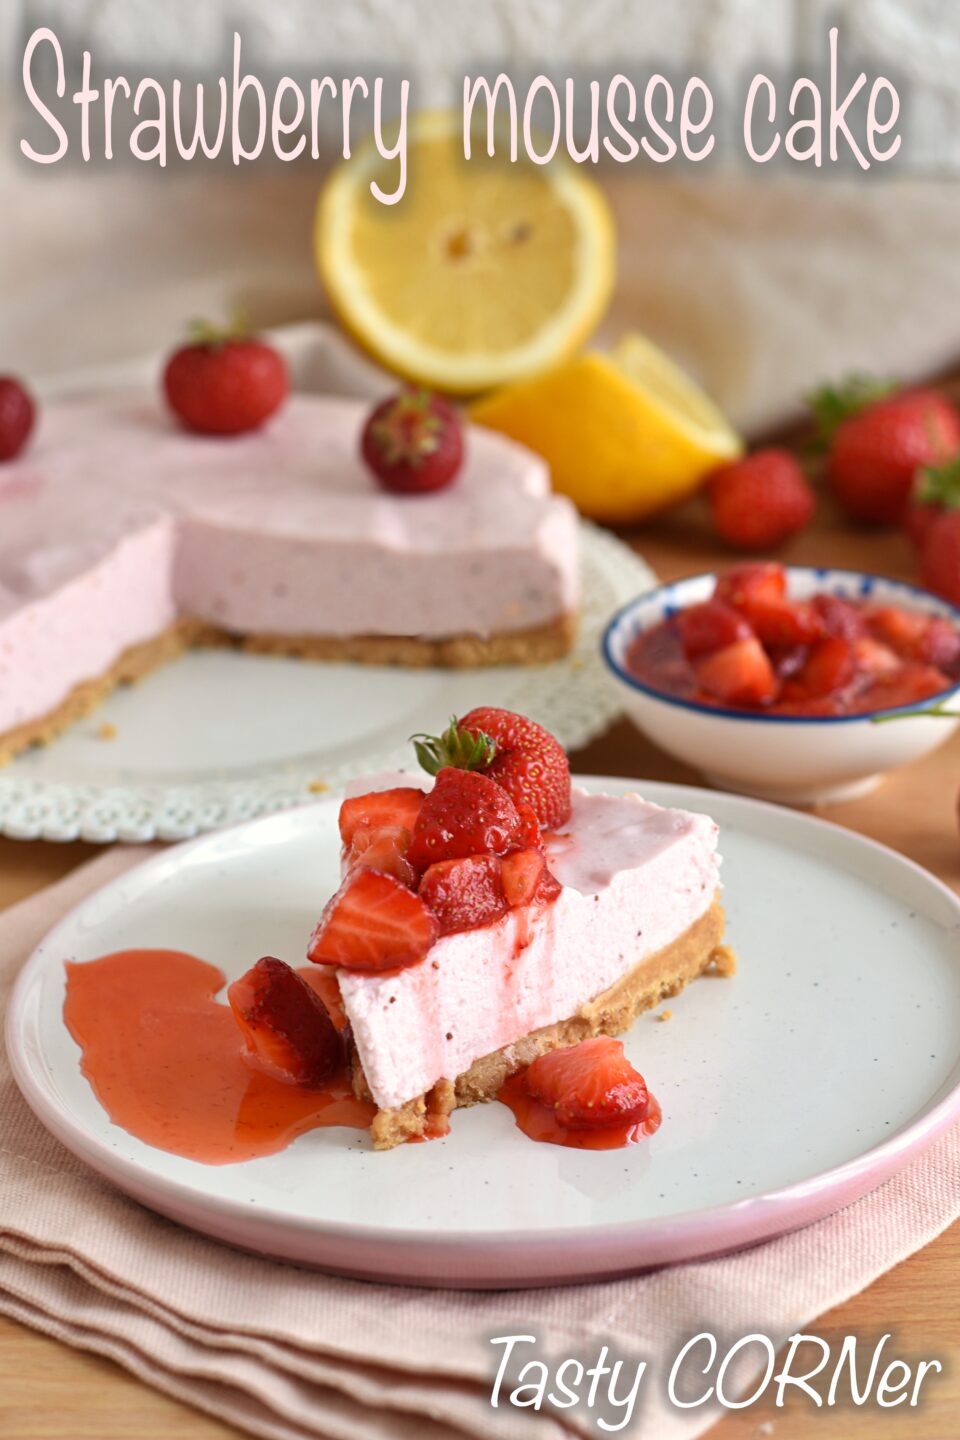 v_ strawberry mousse cake easy recipe like cheesecake by tasty corner